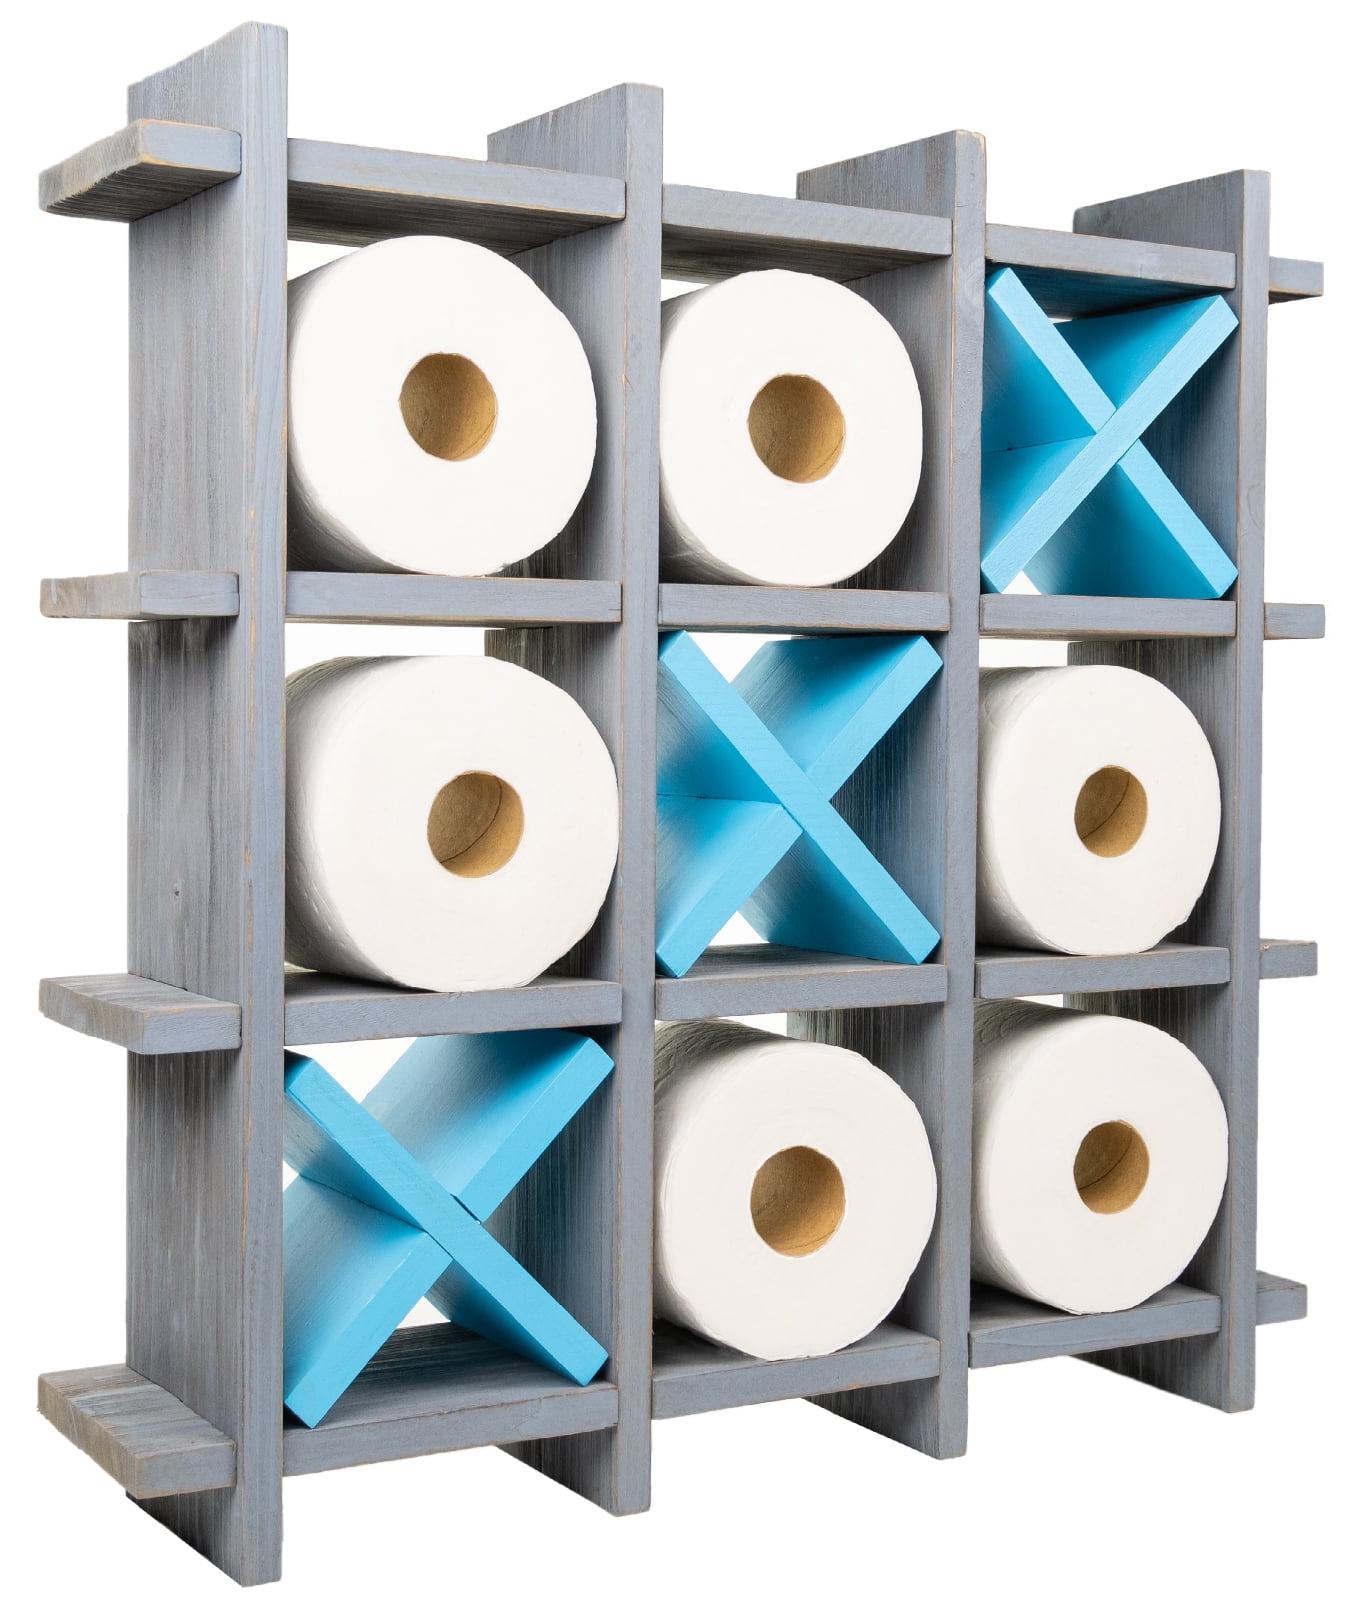 Techvida Free Standing Toilet Paper Holder Stand, Tissue Roll Holder Floor Stand  Storage for Bathroom Black, 2 Pack 